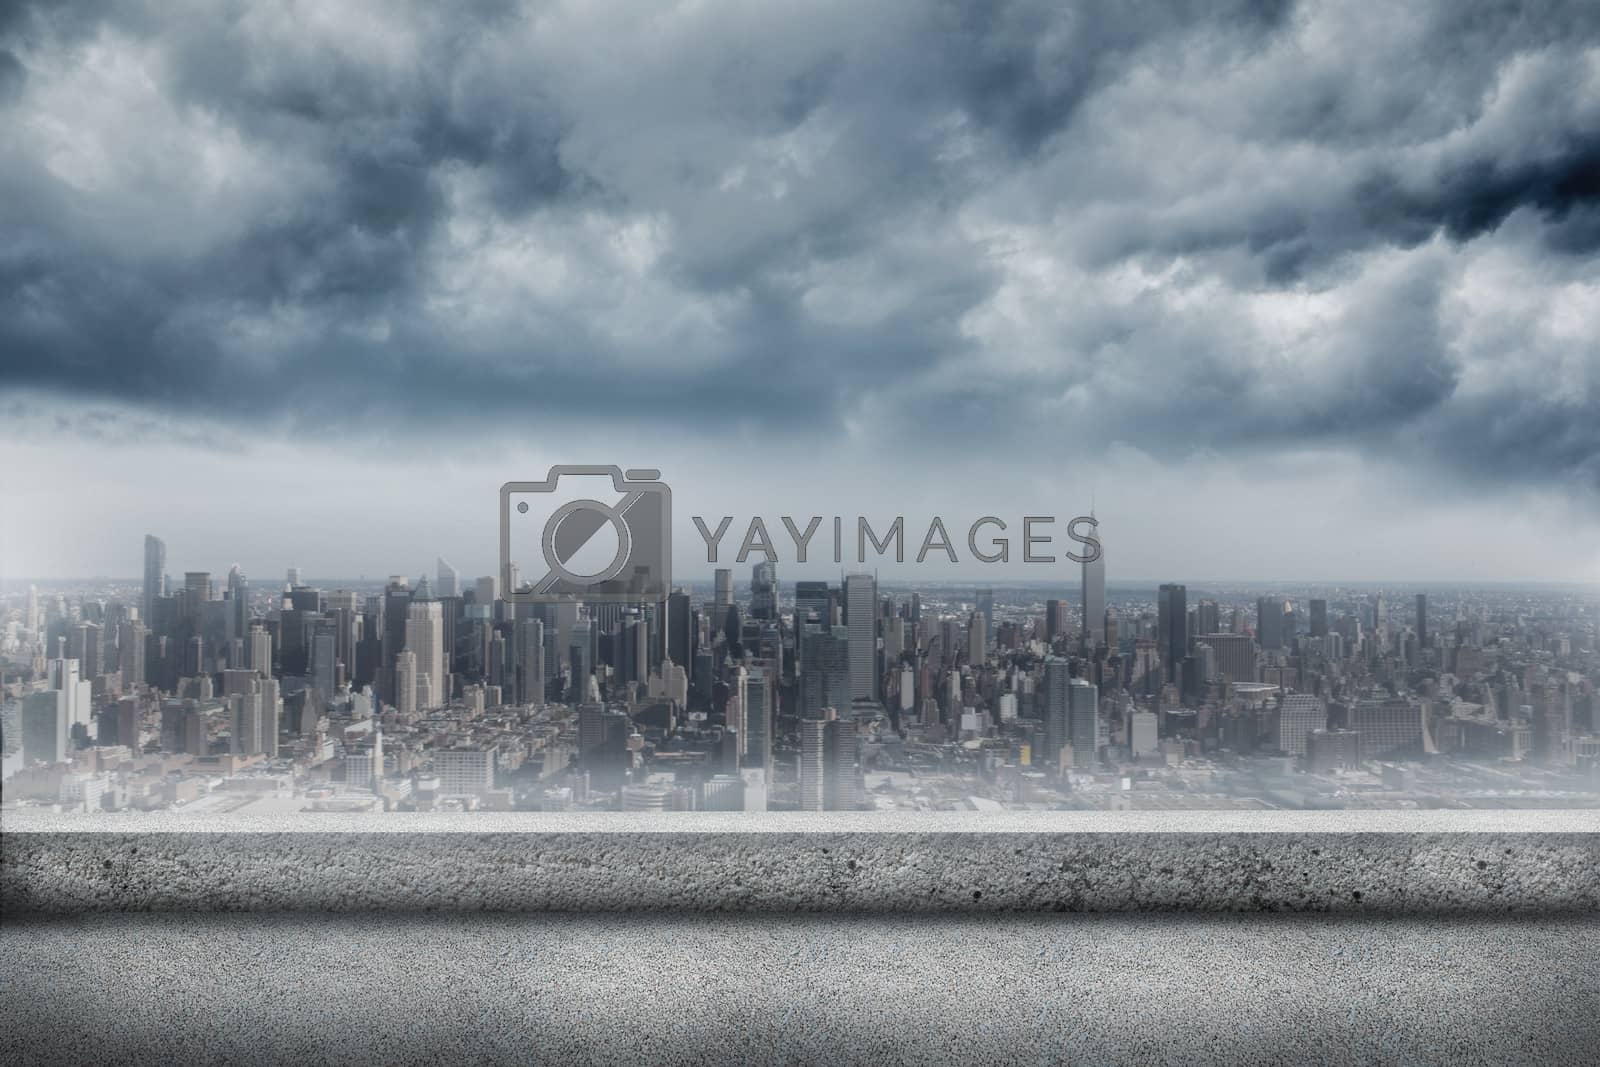 Royalty free image of Balcony overlooking city by Wavebreakmedia